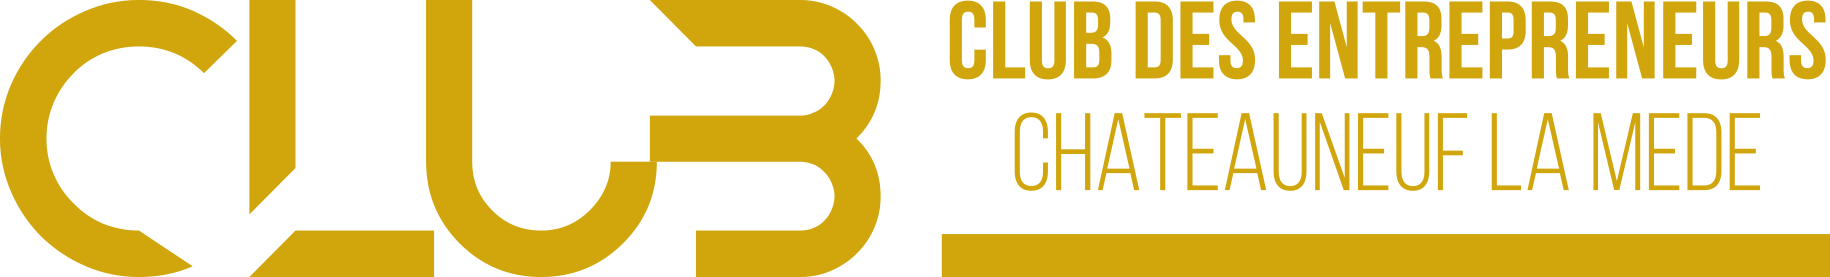 Logo club entrepreneurs Chateauneuf la Mede